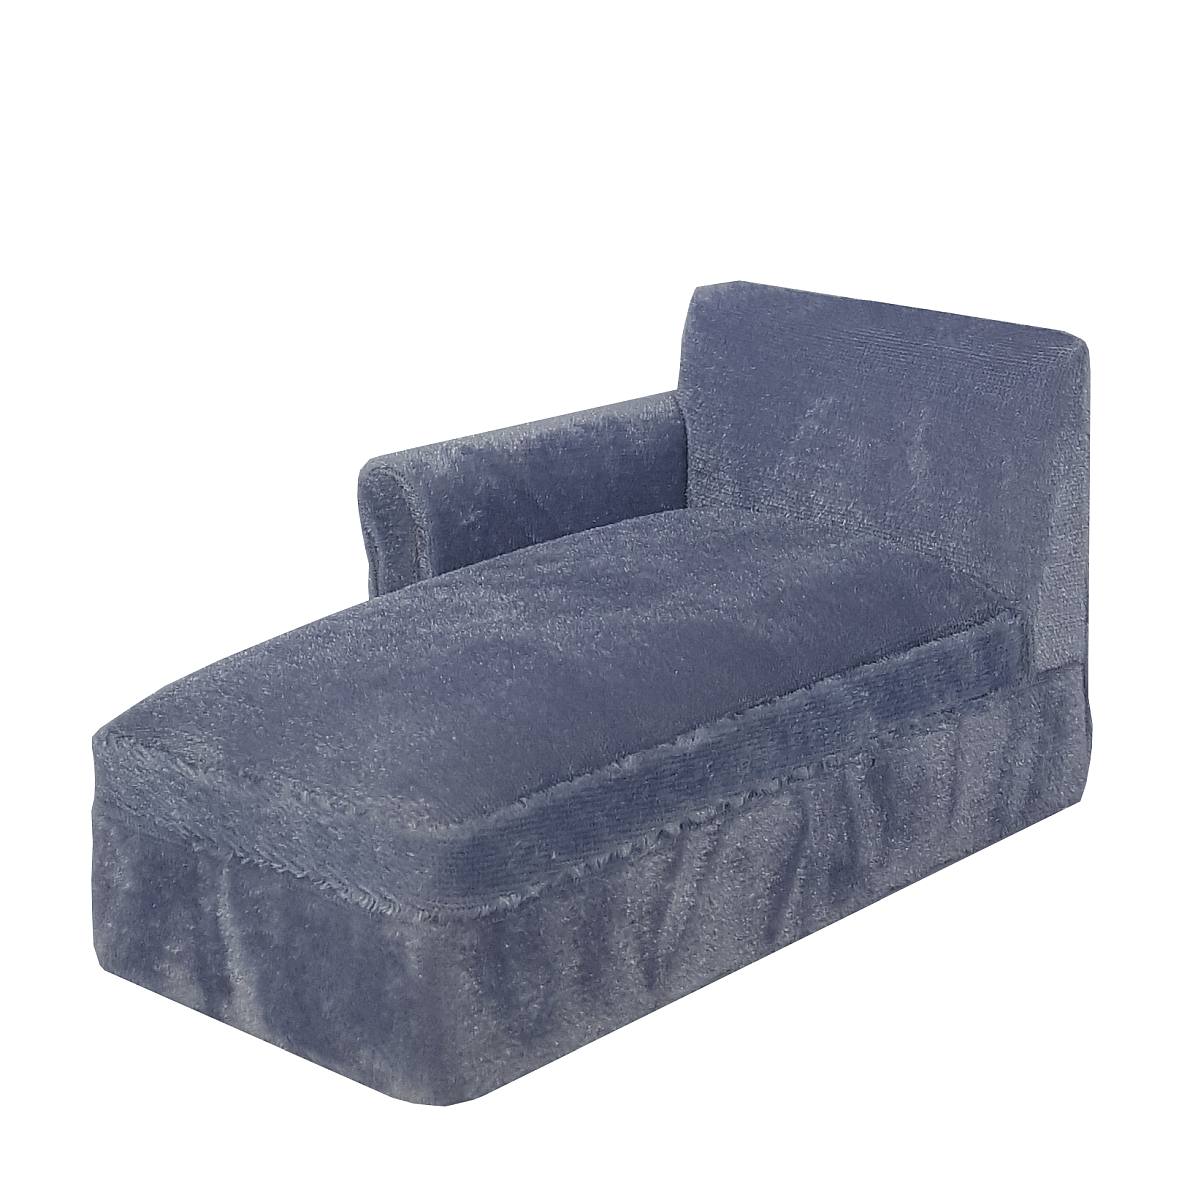 Chaise longue, grey-blue　完成品・ソファベッド　グレーブルー